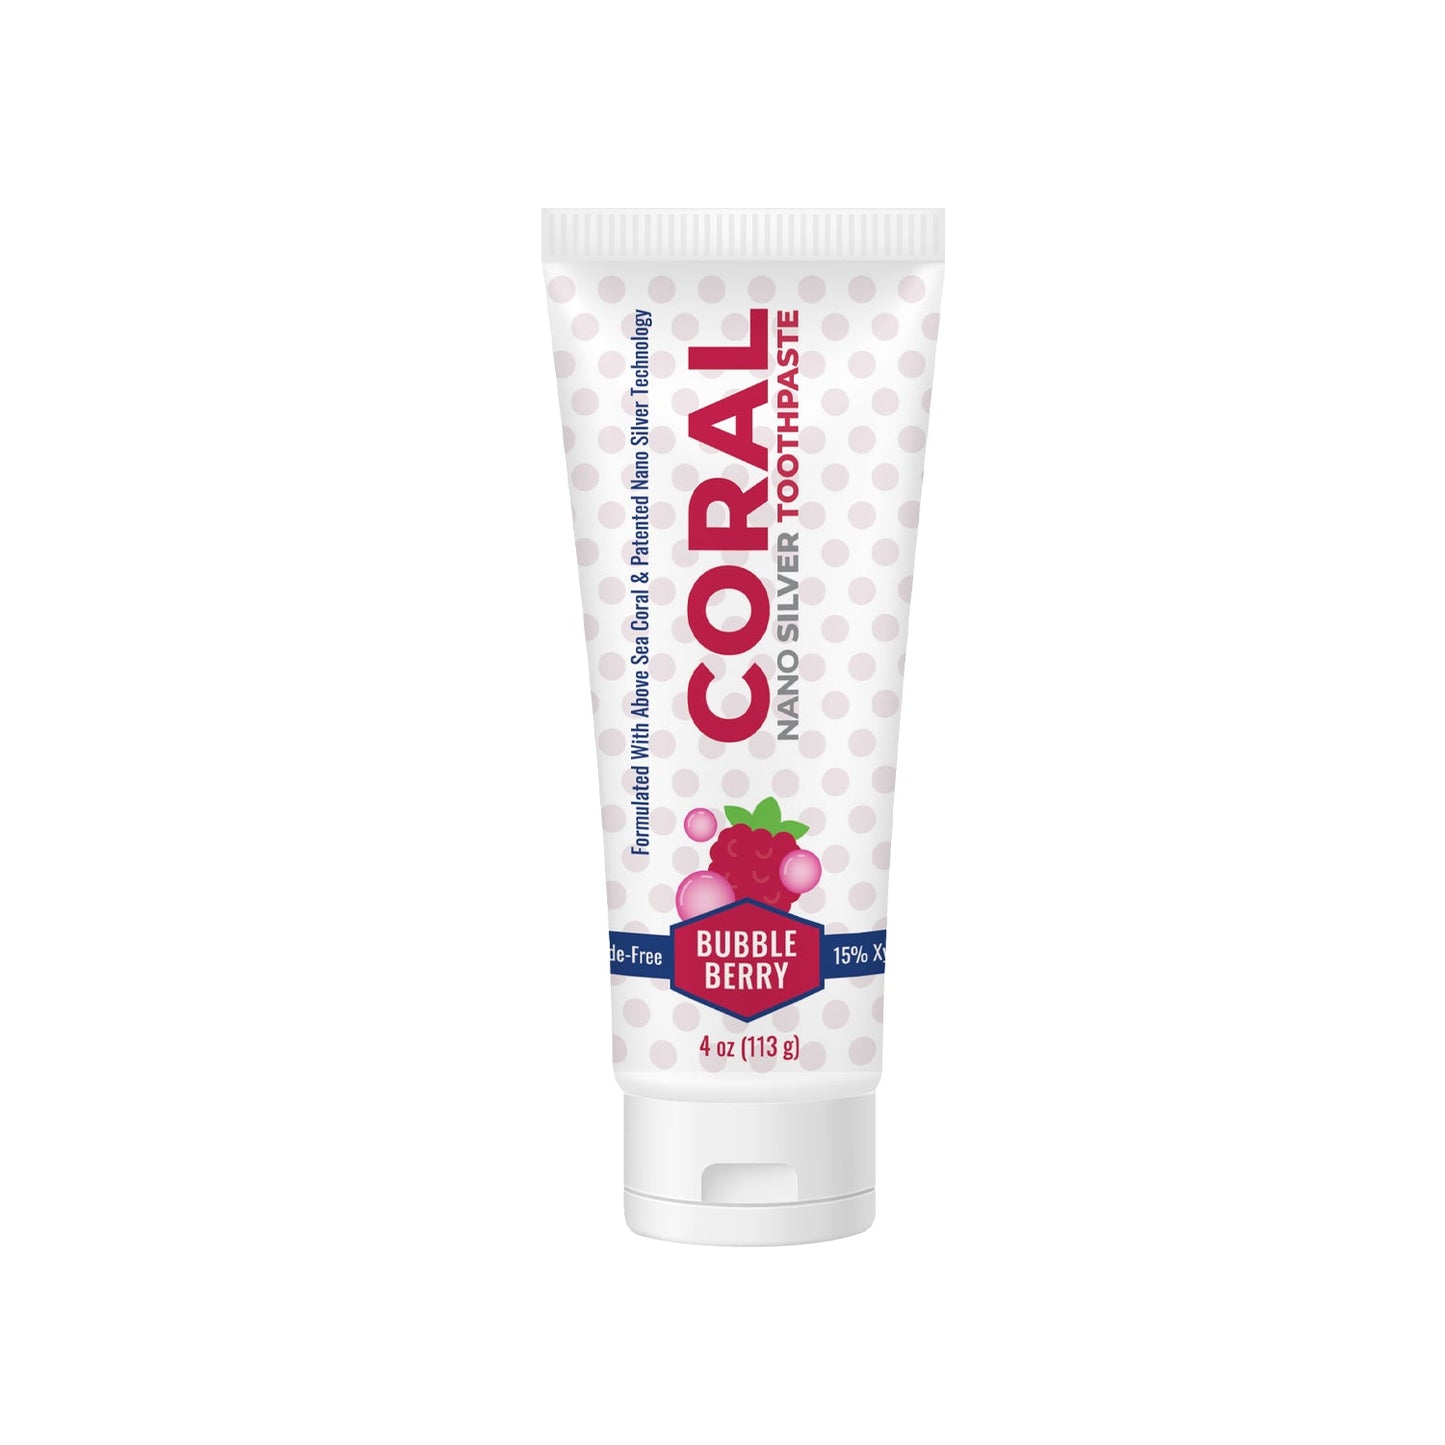 Coral nanosilver toothpaste 113 g